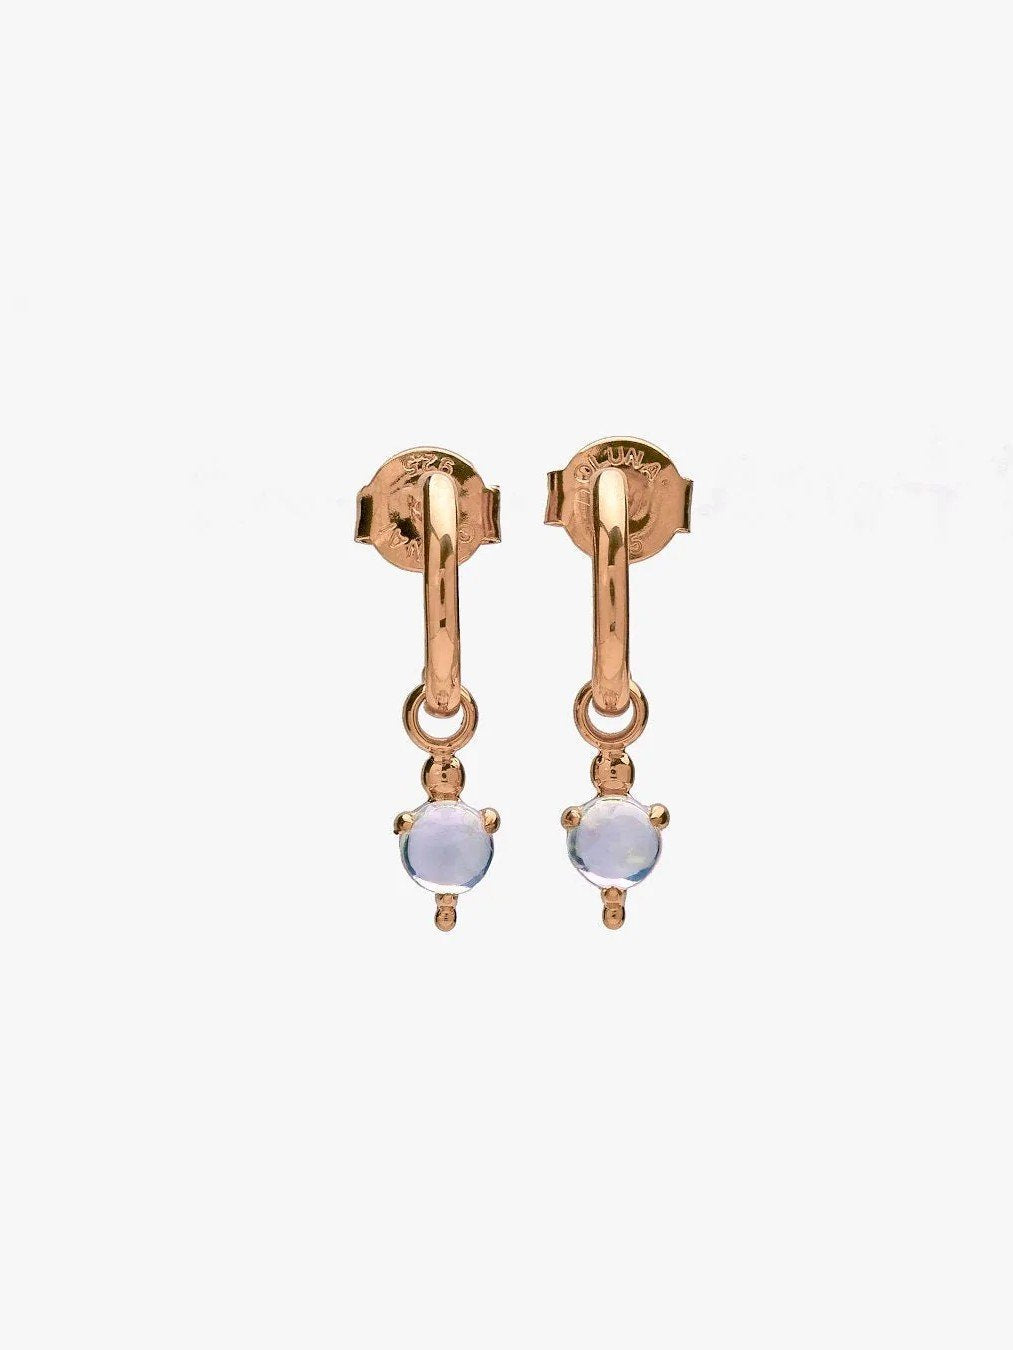 Claire Hoop Earrings - 24k Gold PlatedBackUpItemsBirthstone HoopsLunai Jewelry